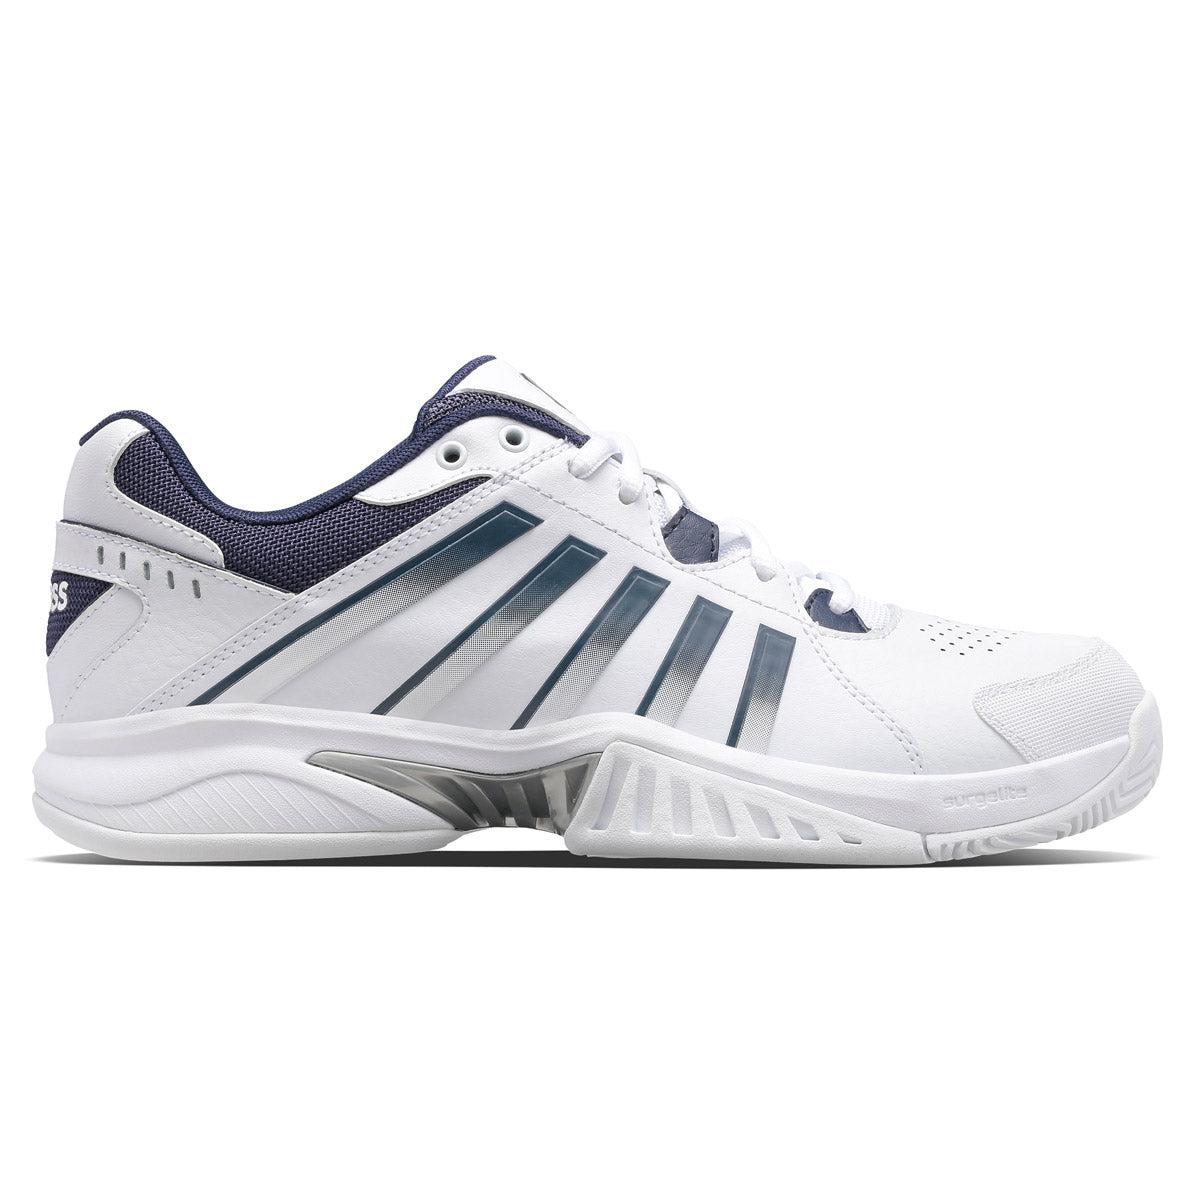 K-Swiss Receiver V Mens Tennis Shoes - White/Peacoat/Silver-Bruntsfield Sports Online